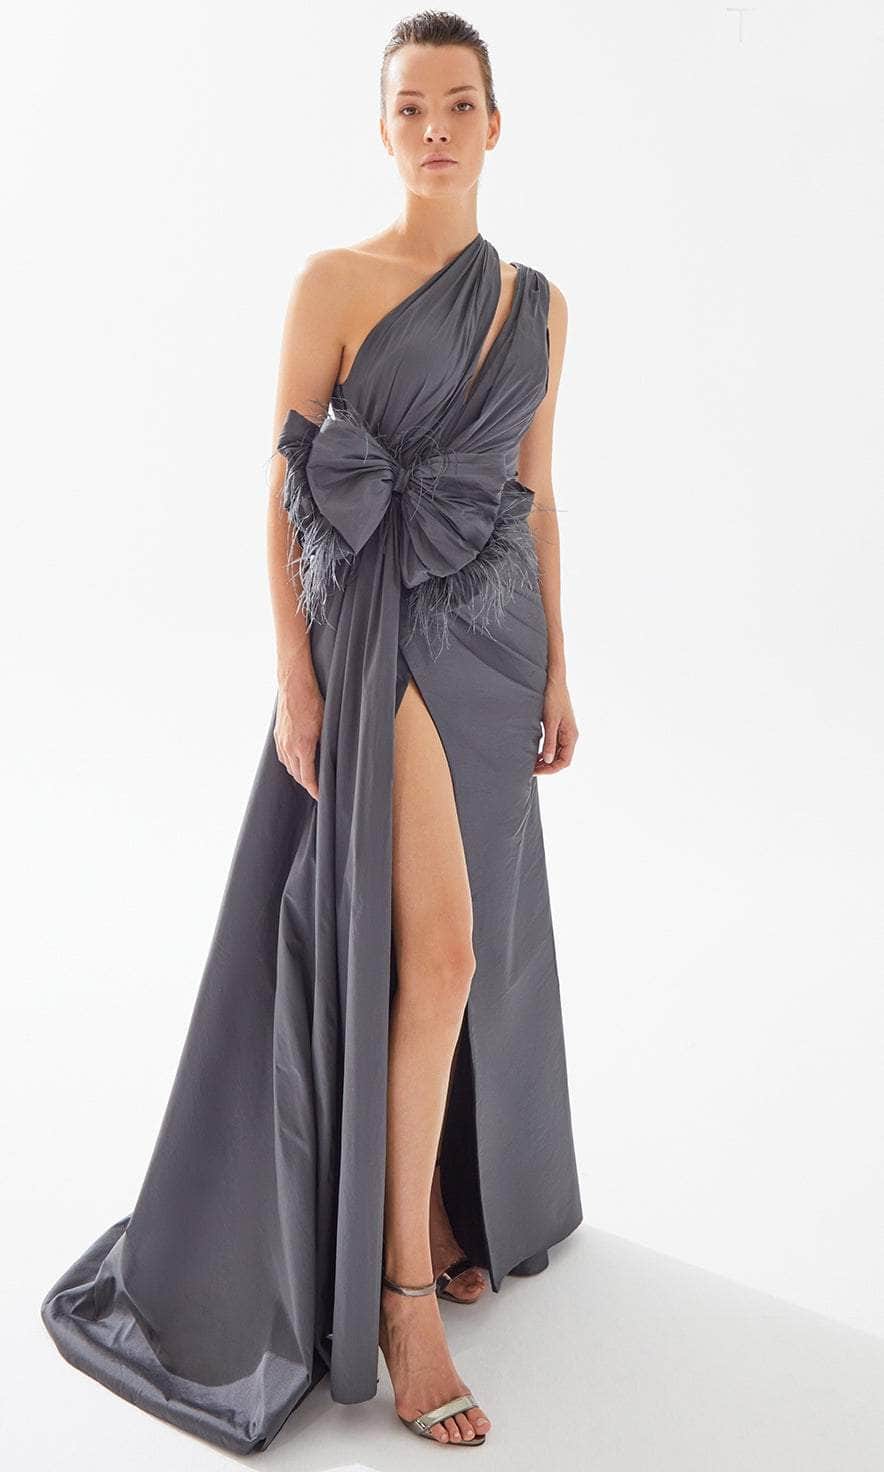 Tarik Ediz 98219 - Bow Accent A-Line Evening Gown Special Occasion Dress